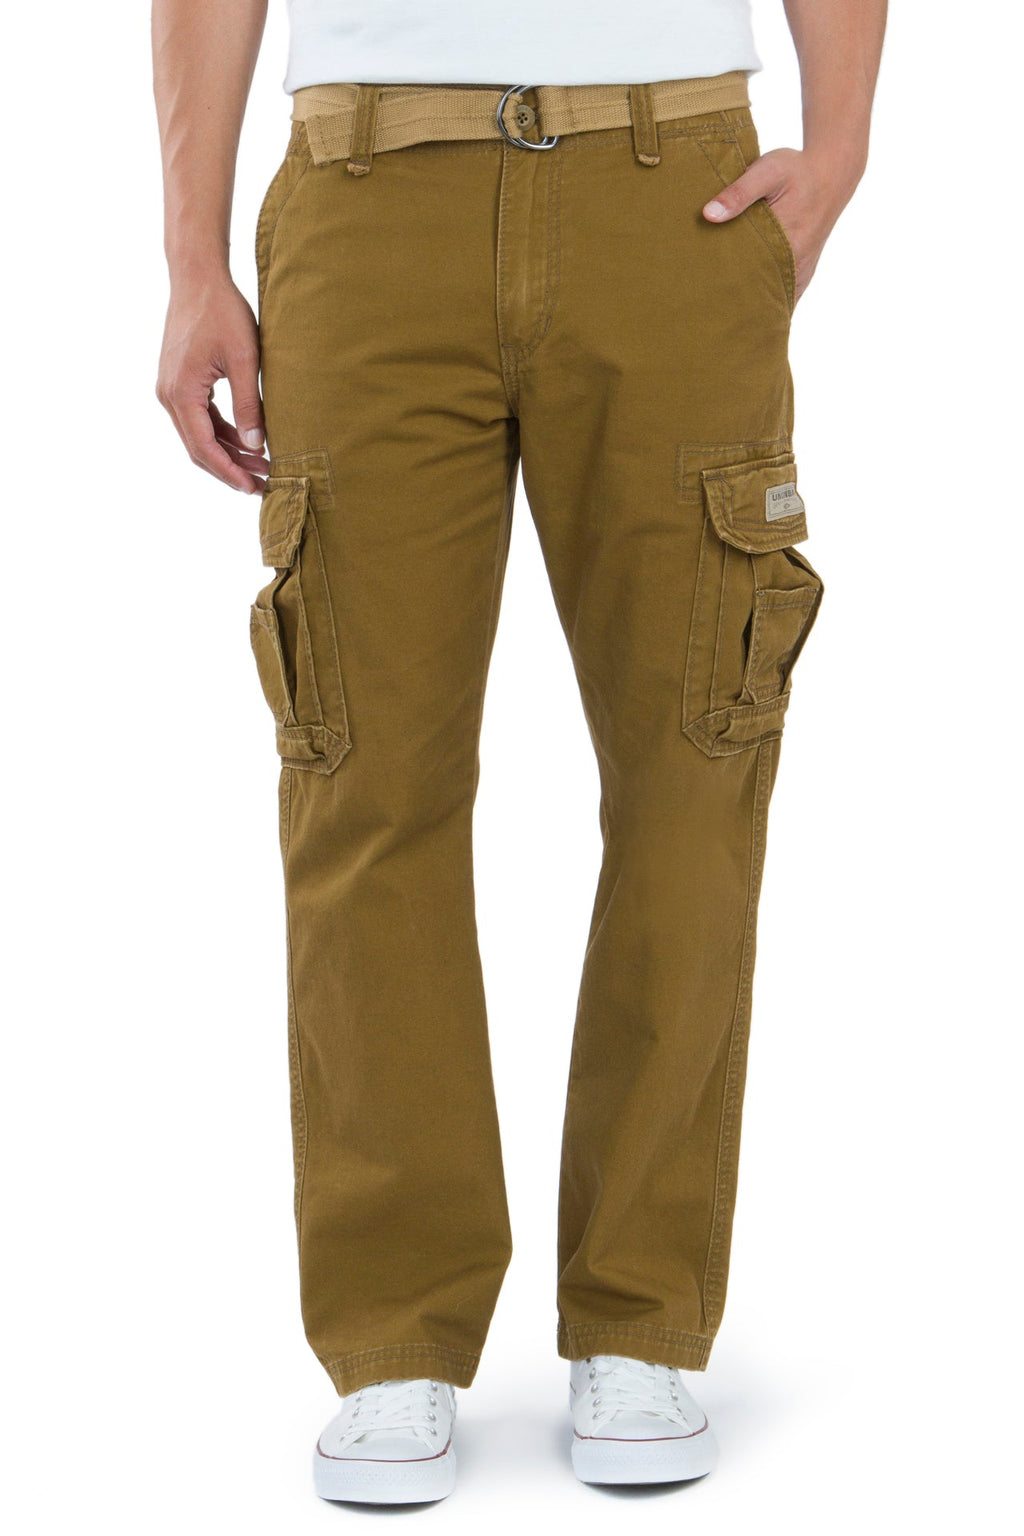 Cargo Pants for Men - Slim, Skinny, Khaki & More